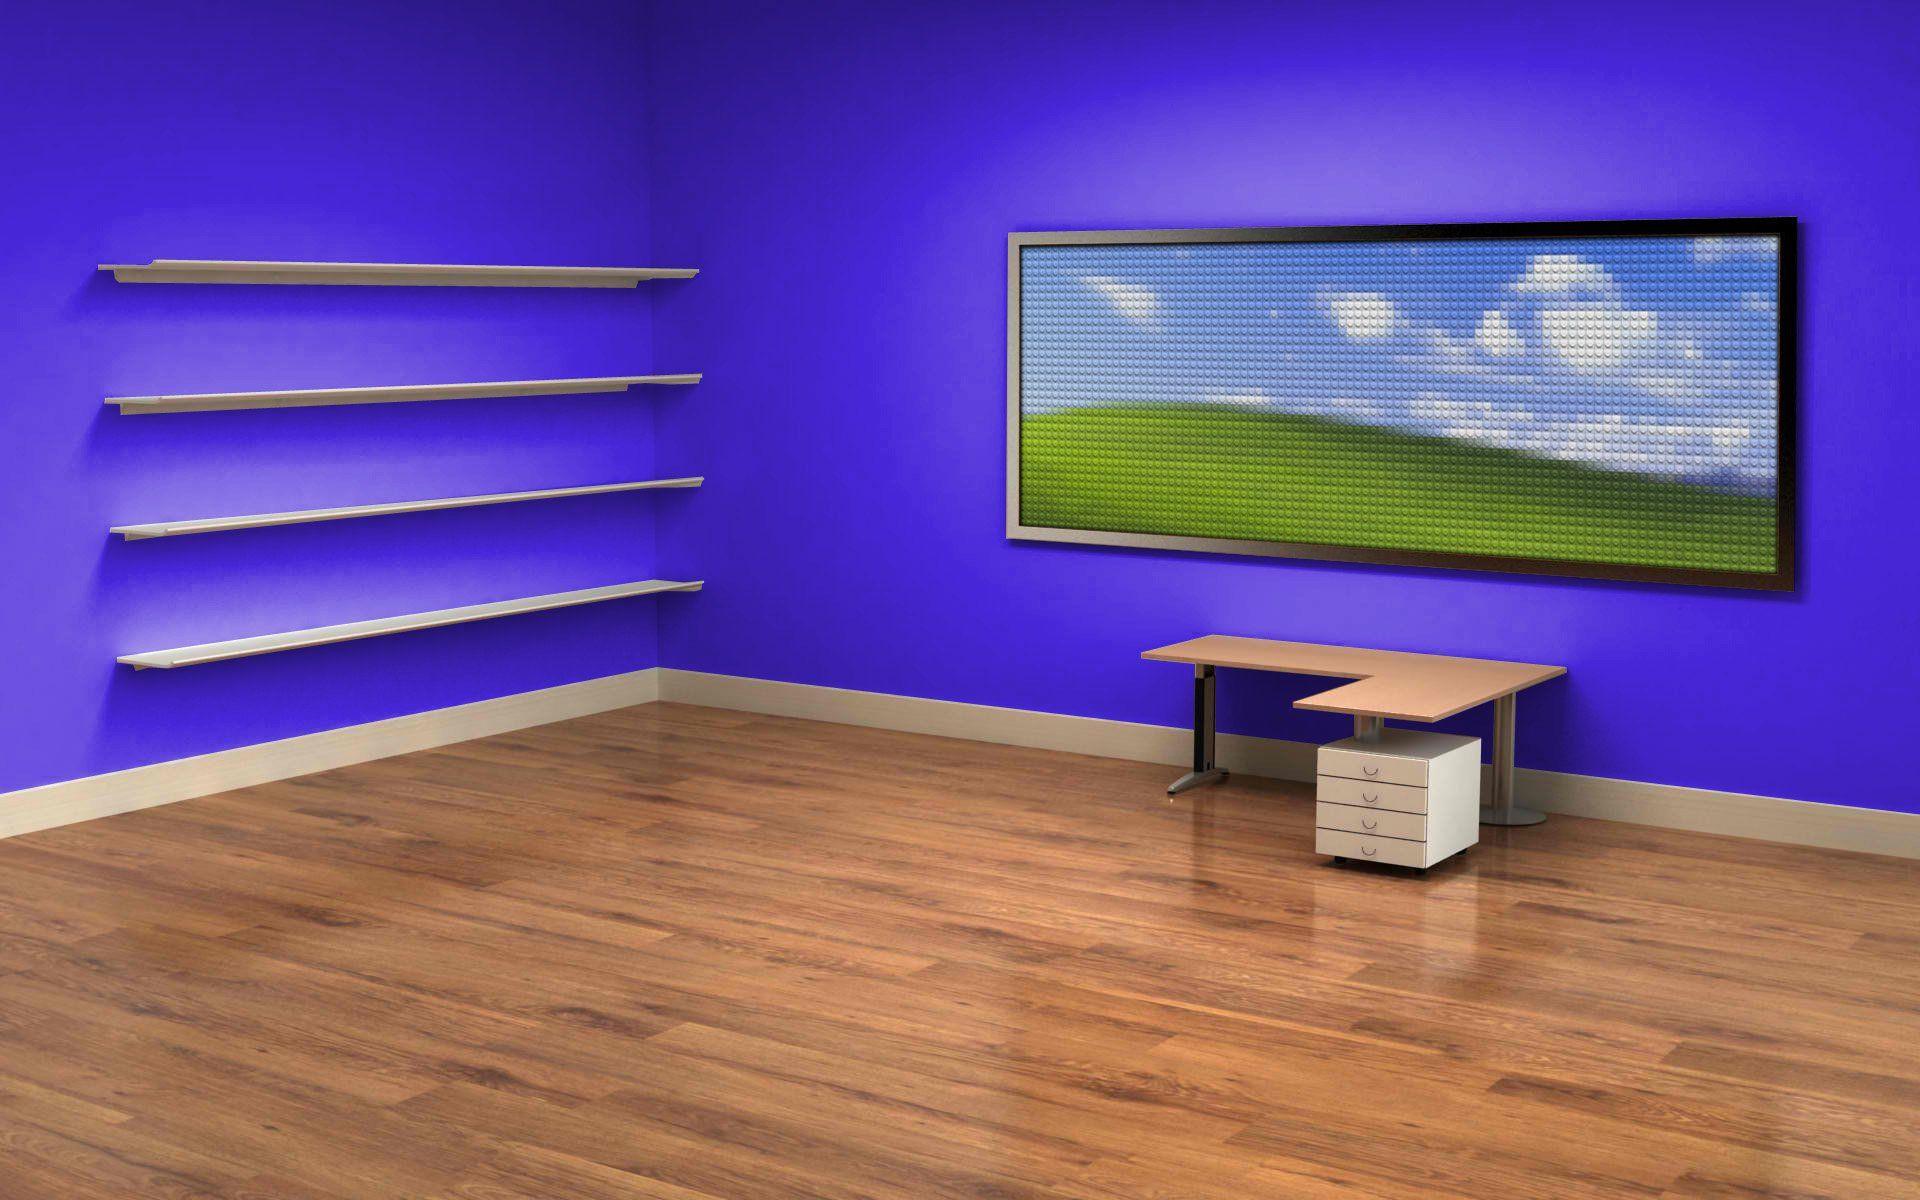 Shelf Desktop Backgrounds 460641